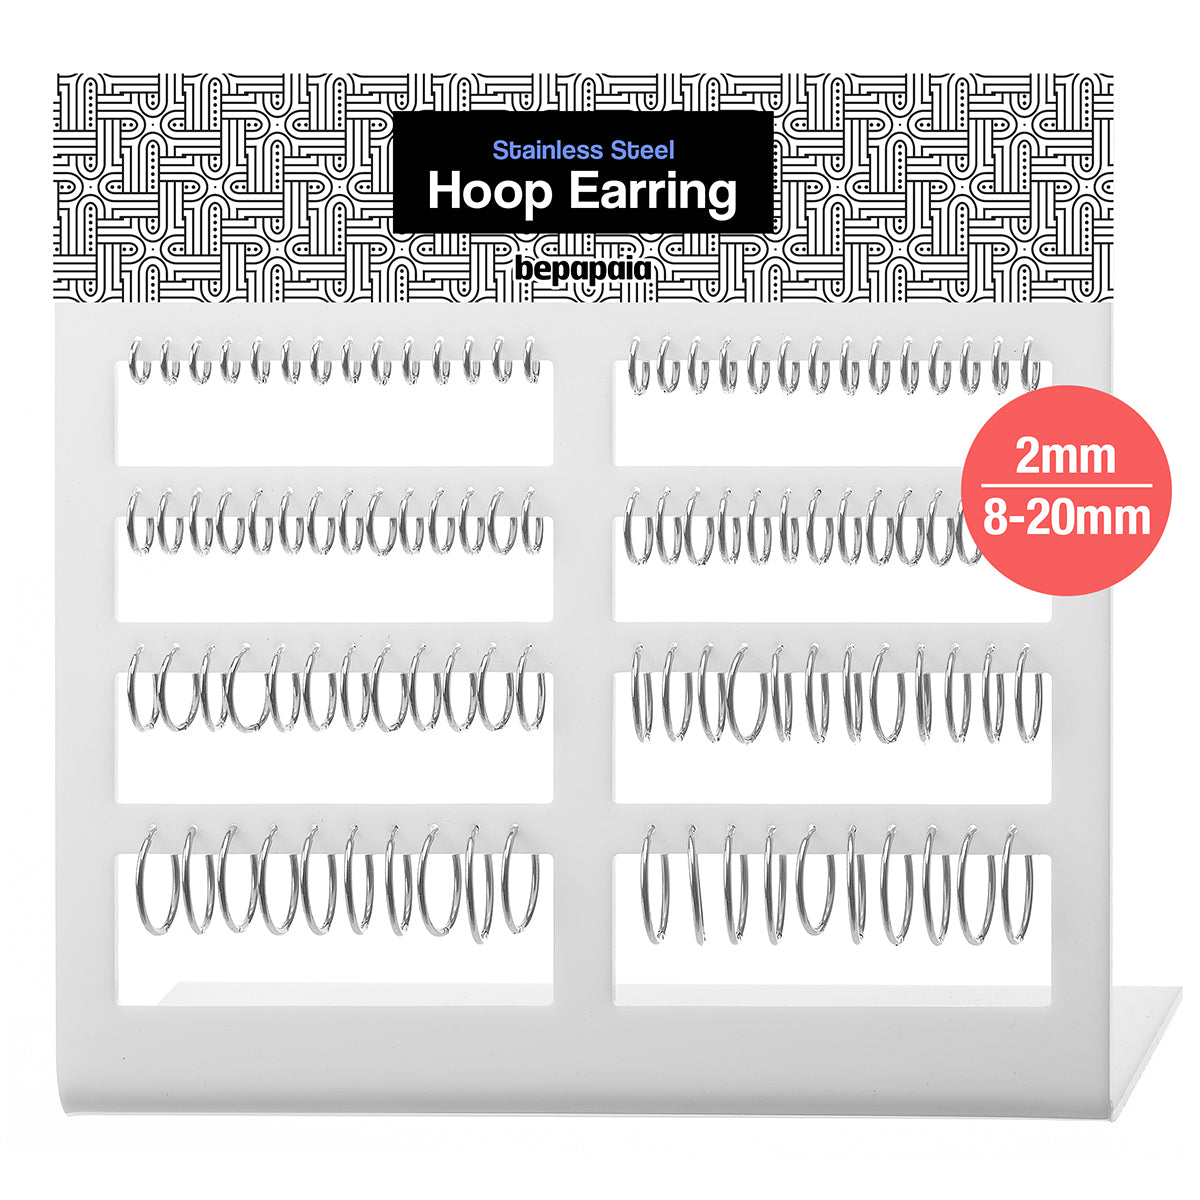 Steel hoop earring 2mm (8-20mm)